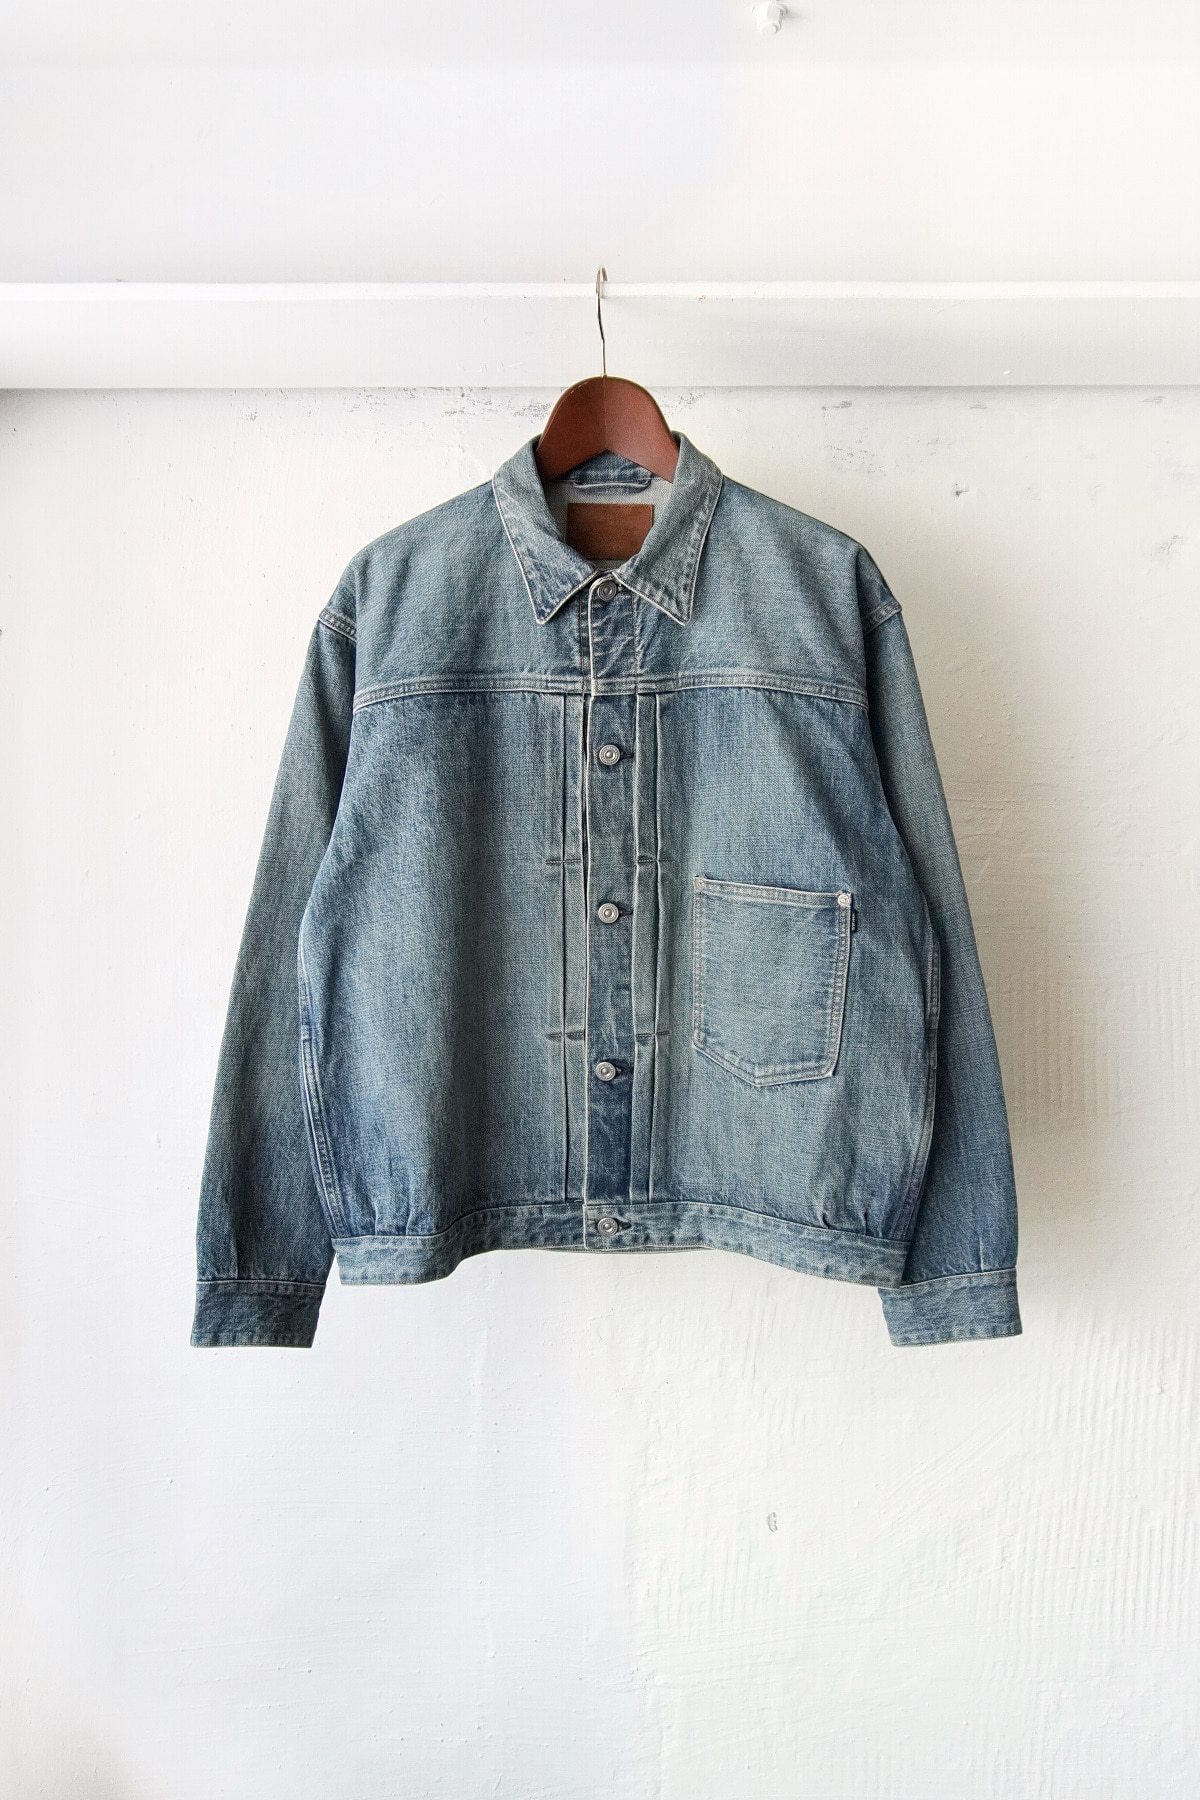 [OLD JOE BRAND] Riveted One Pocket Jean Jacket - Fade Indigo